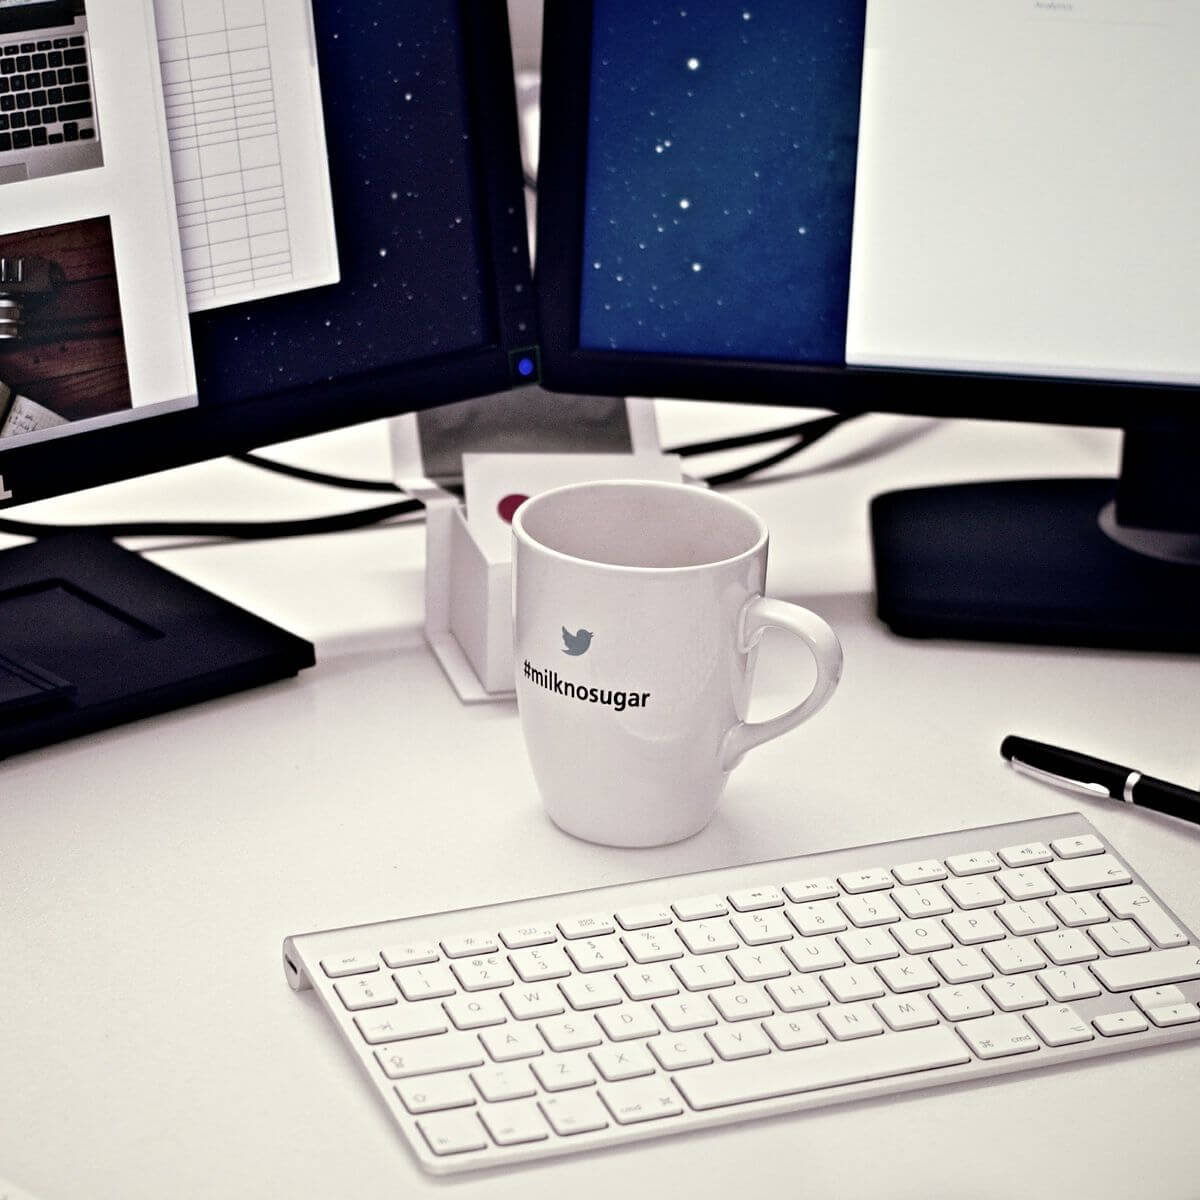 desktops with mug - Windows server does not allow clipboard redirection